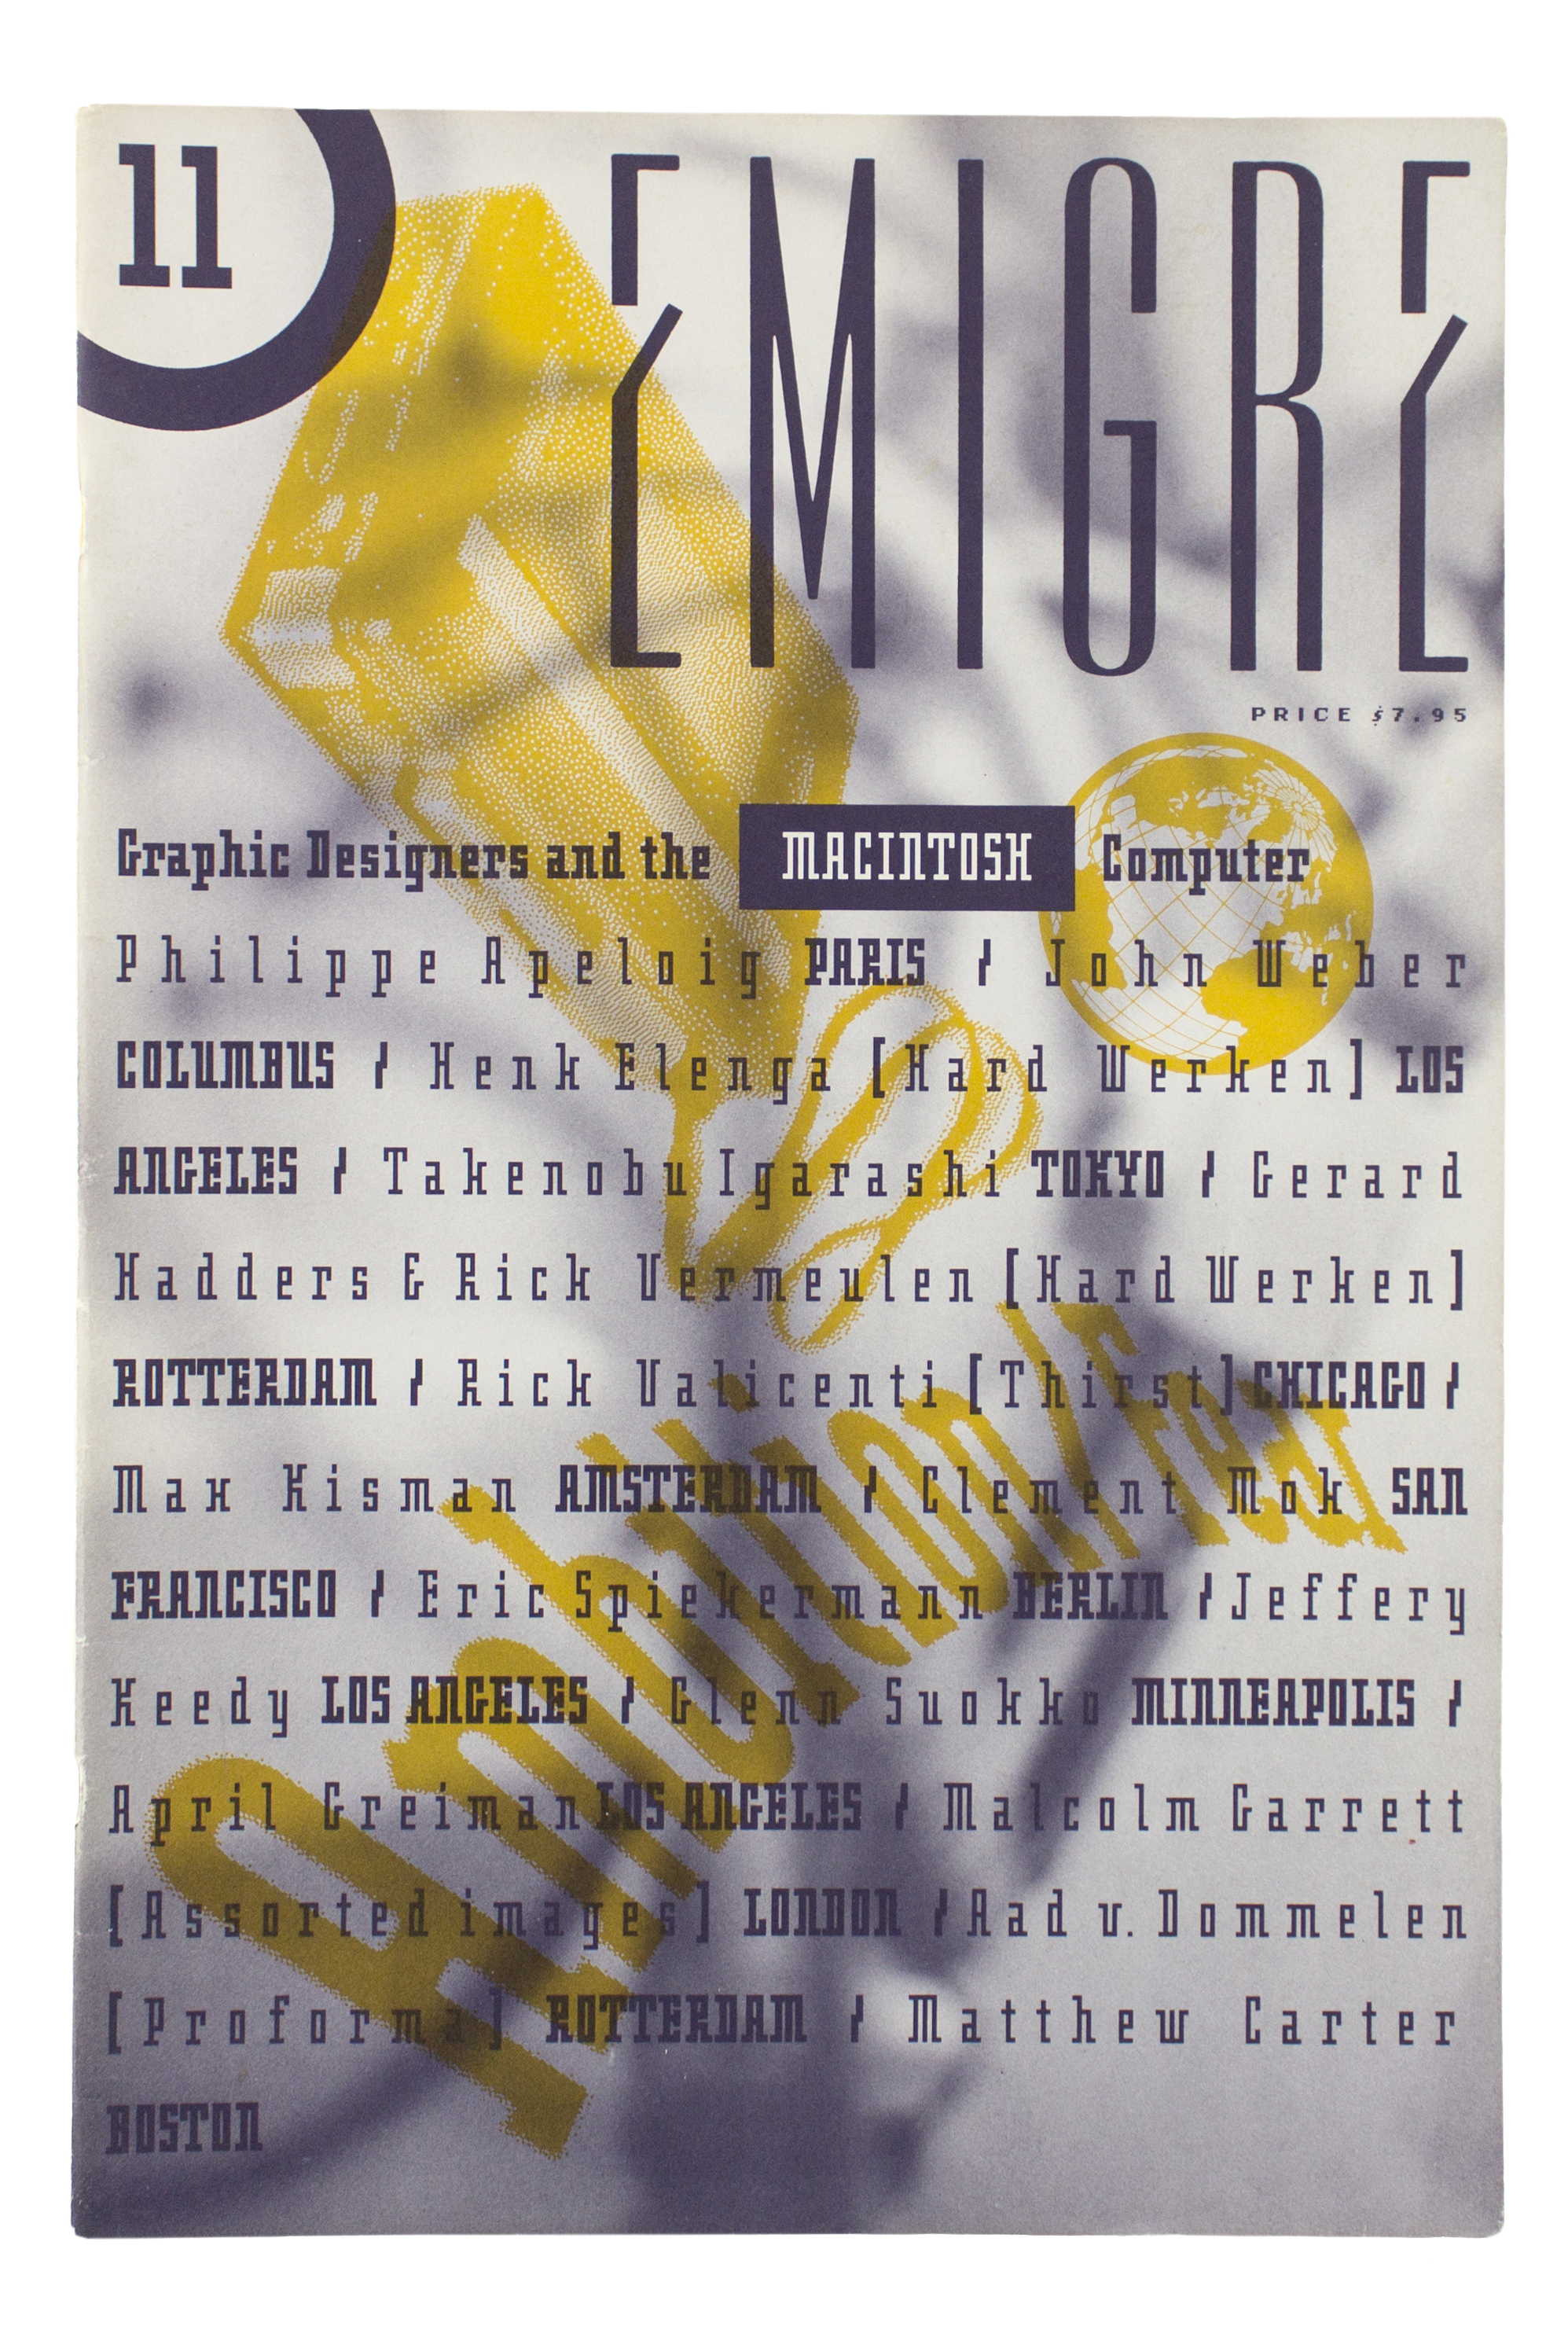 Emigre magazine: design, discourse and authorship | Typography at Reading